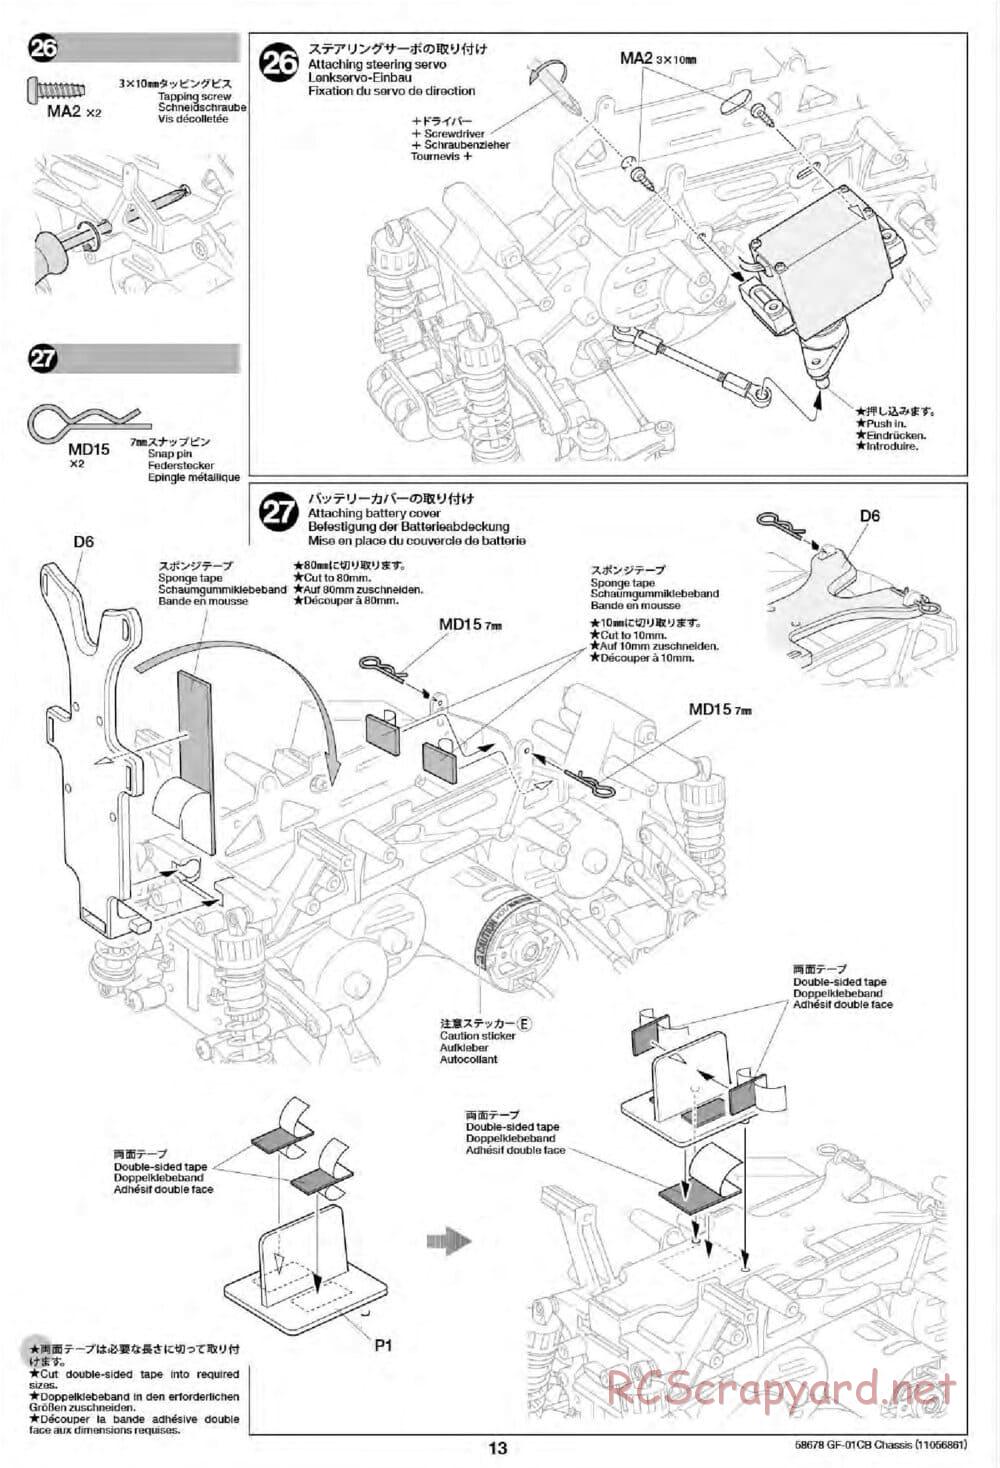 Tamiya - Comical Avante - GF-01CB Chassis - Manual - Page 15